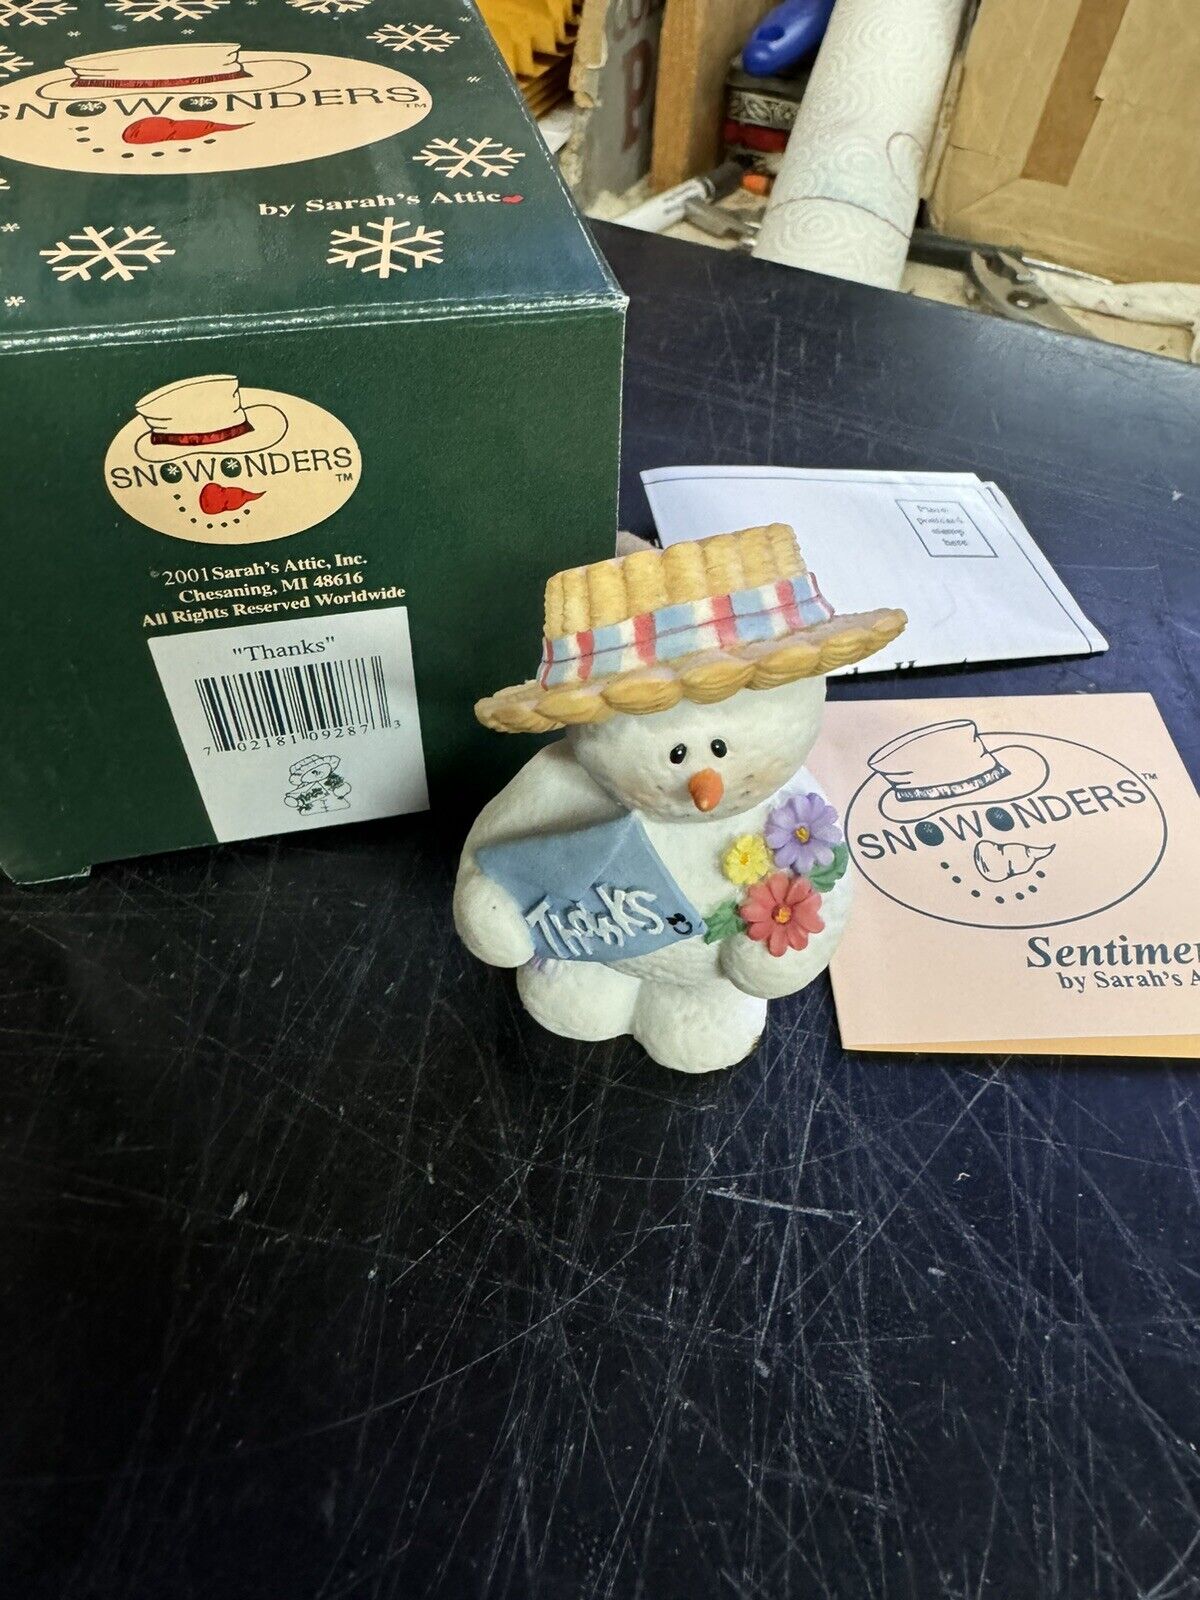 sarahs attic snowonders Thanks Figurine In Box 9287